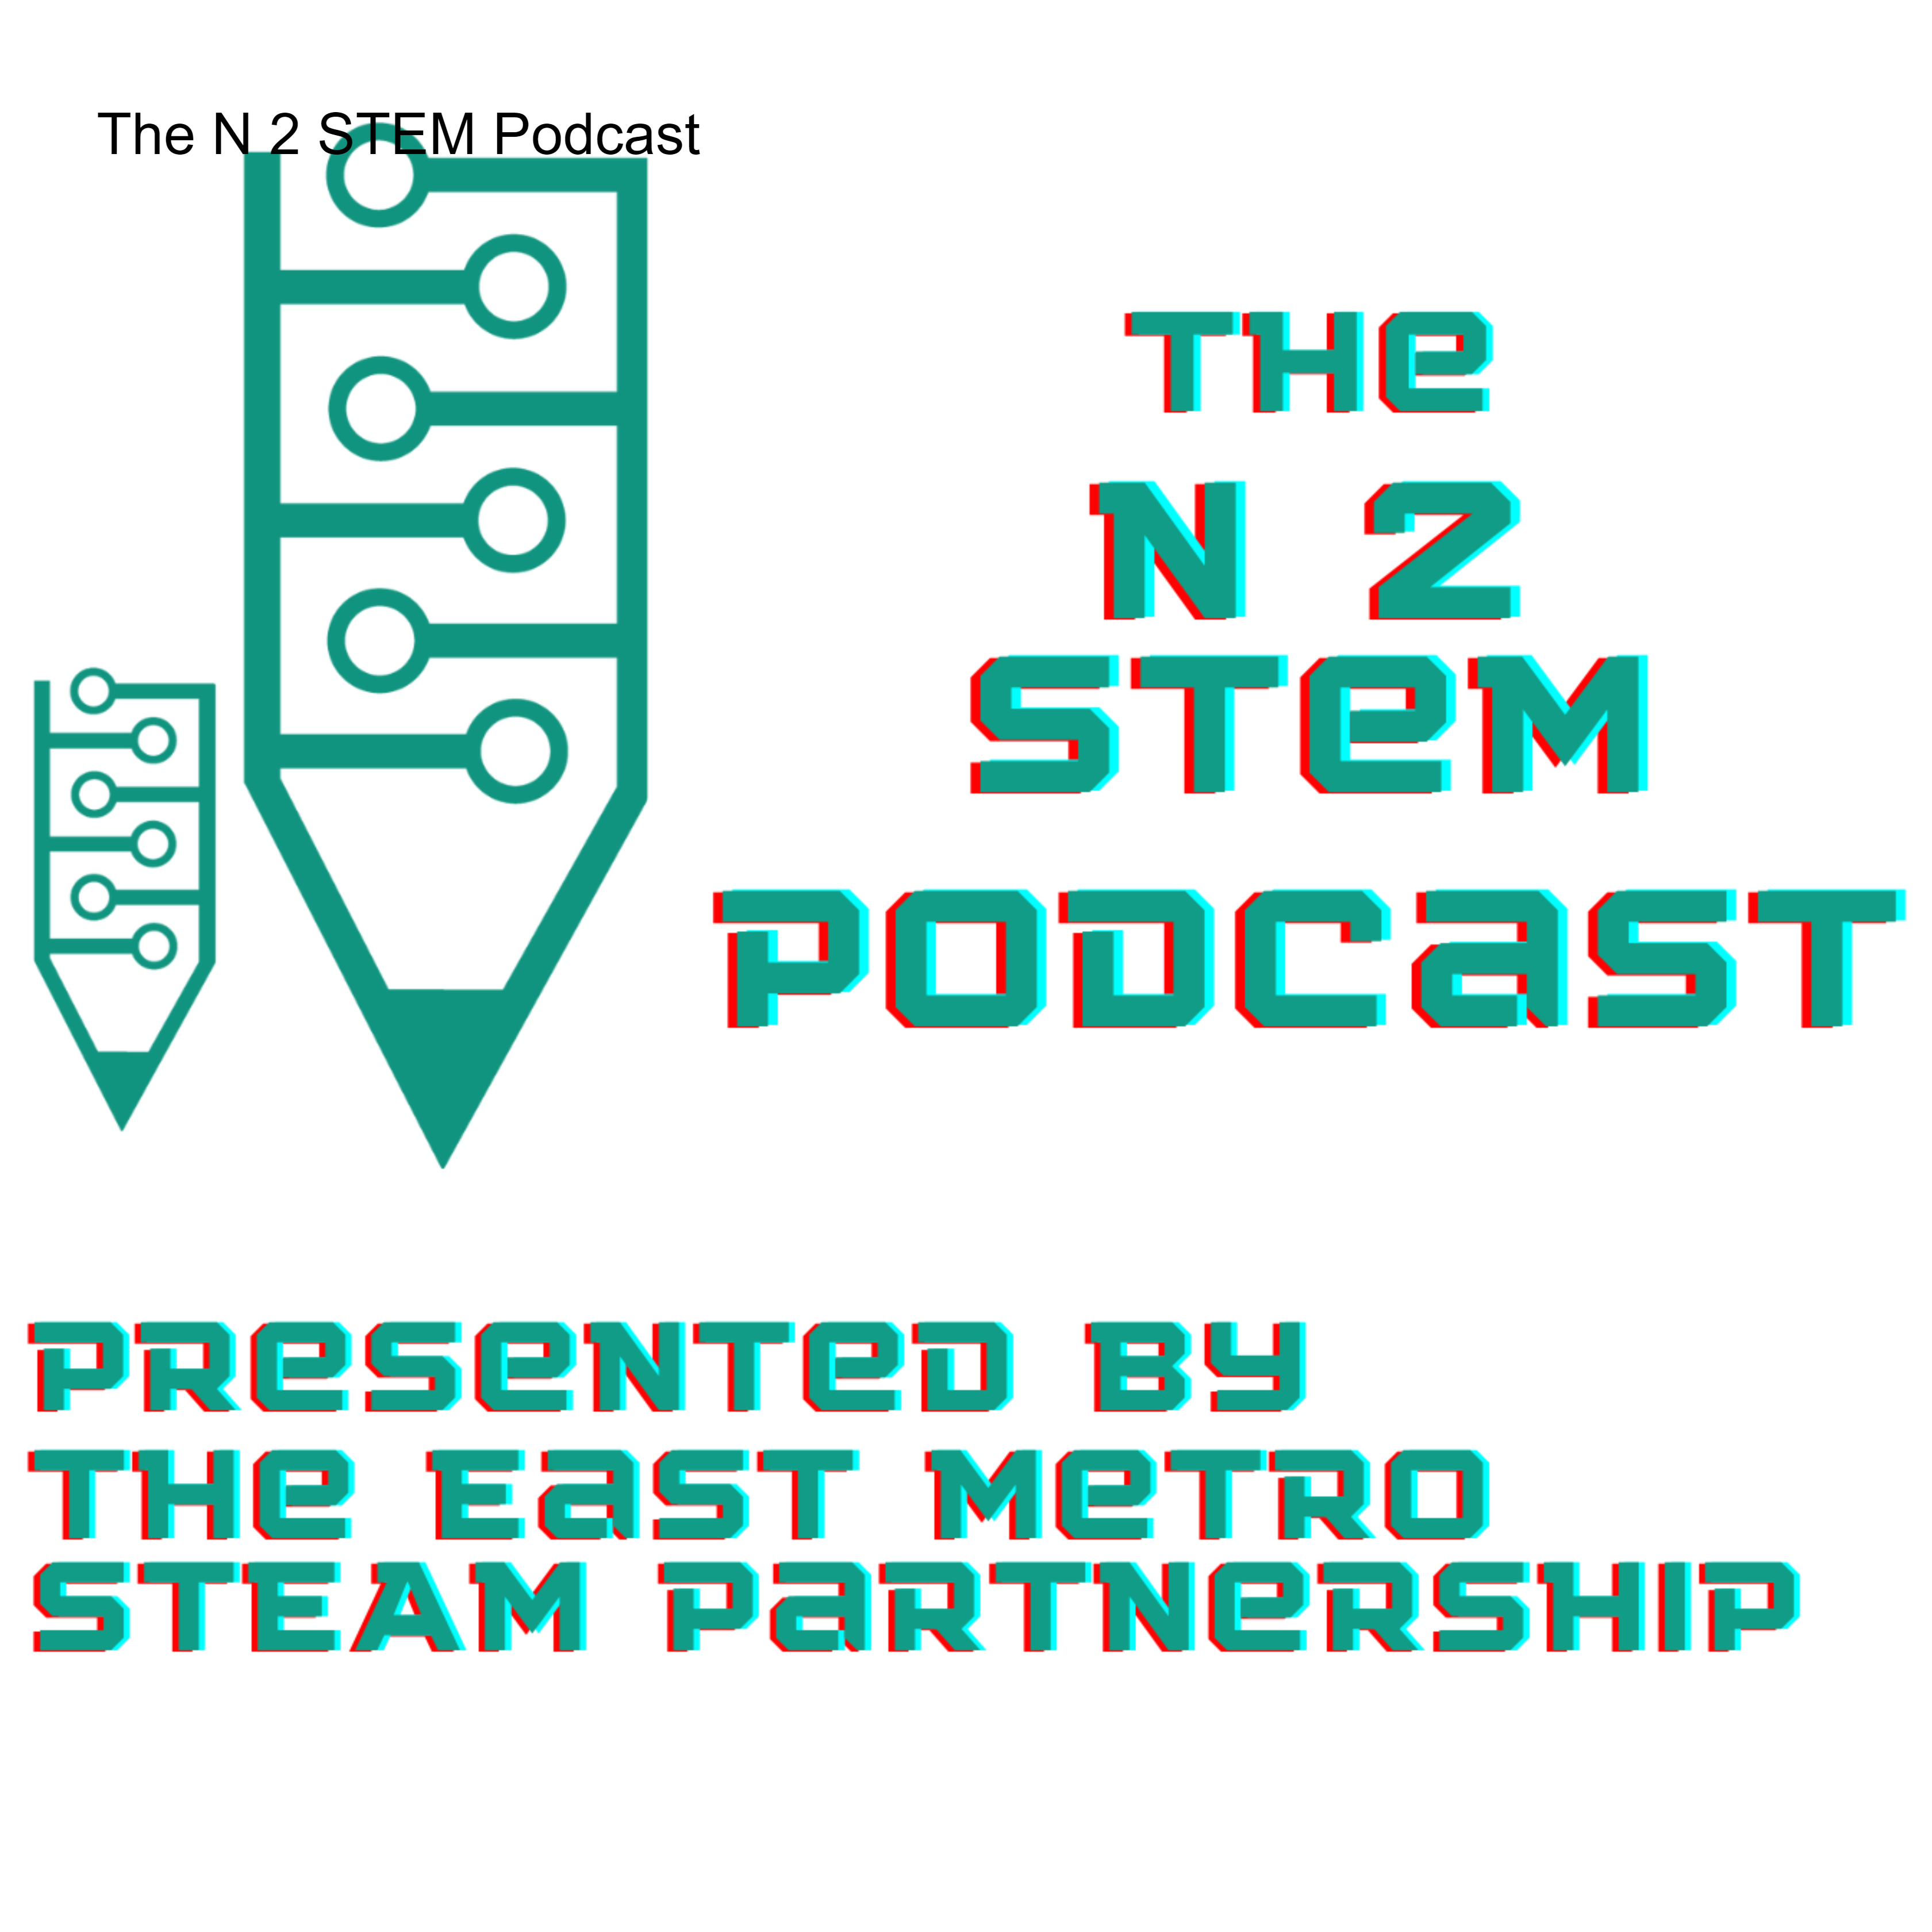 The N 2 STEM Podcast